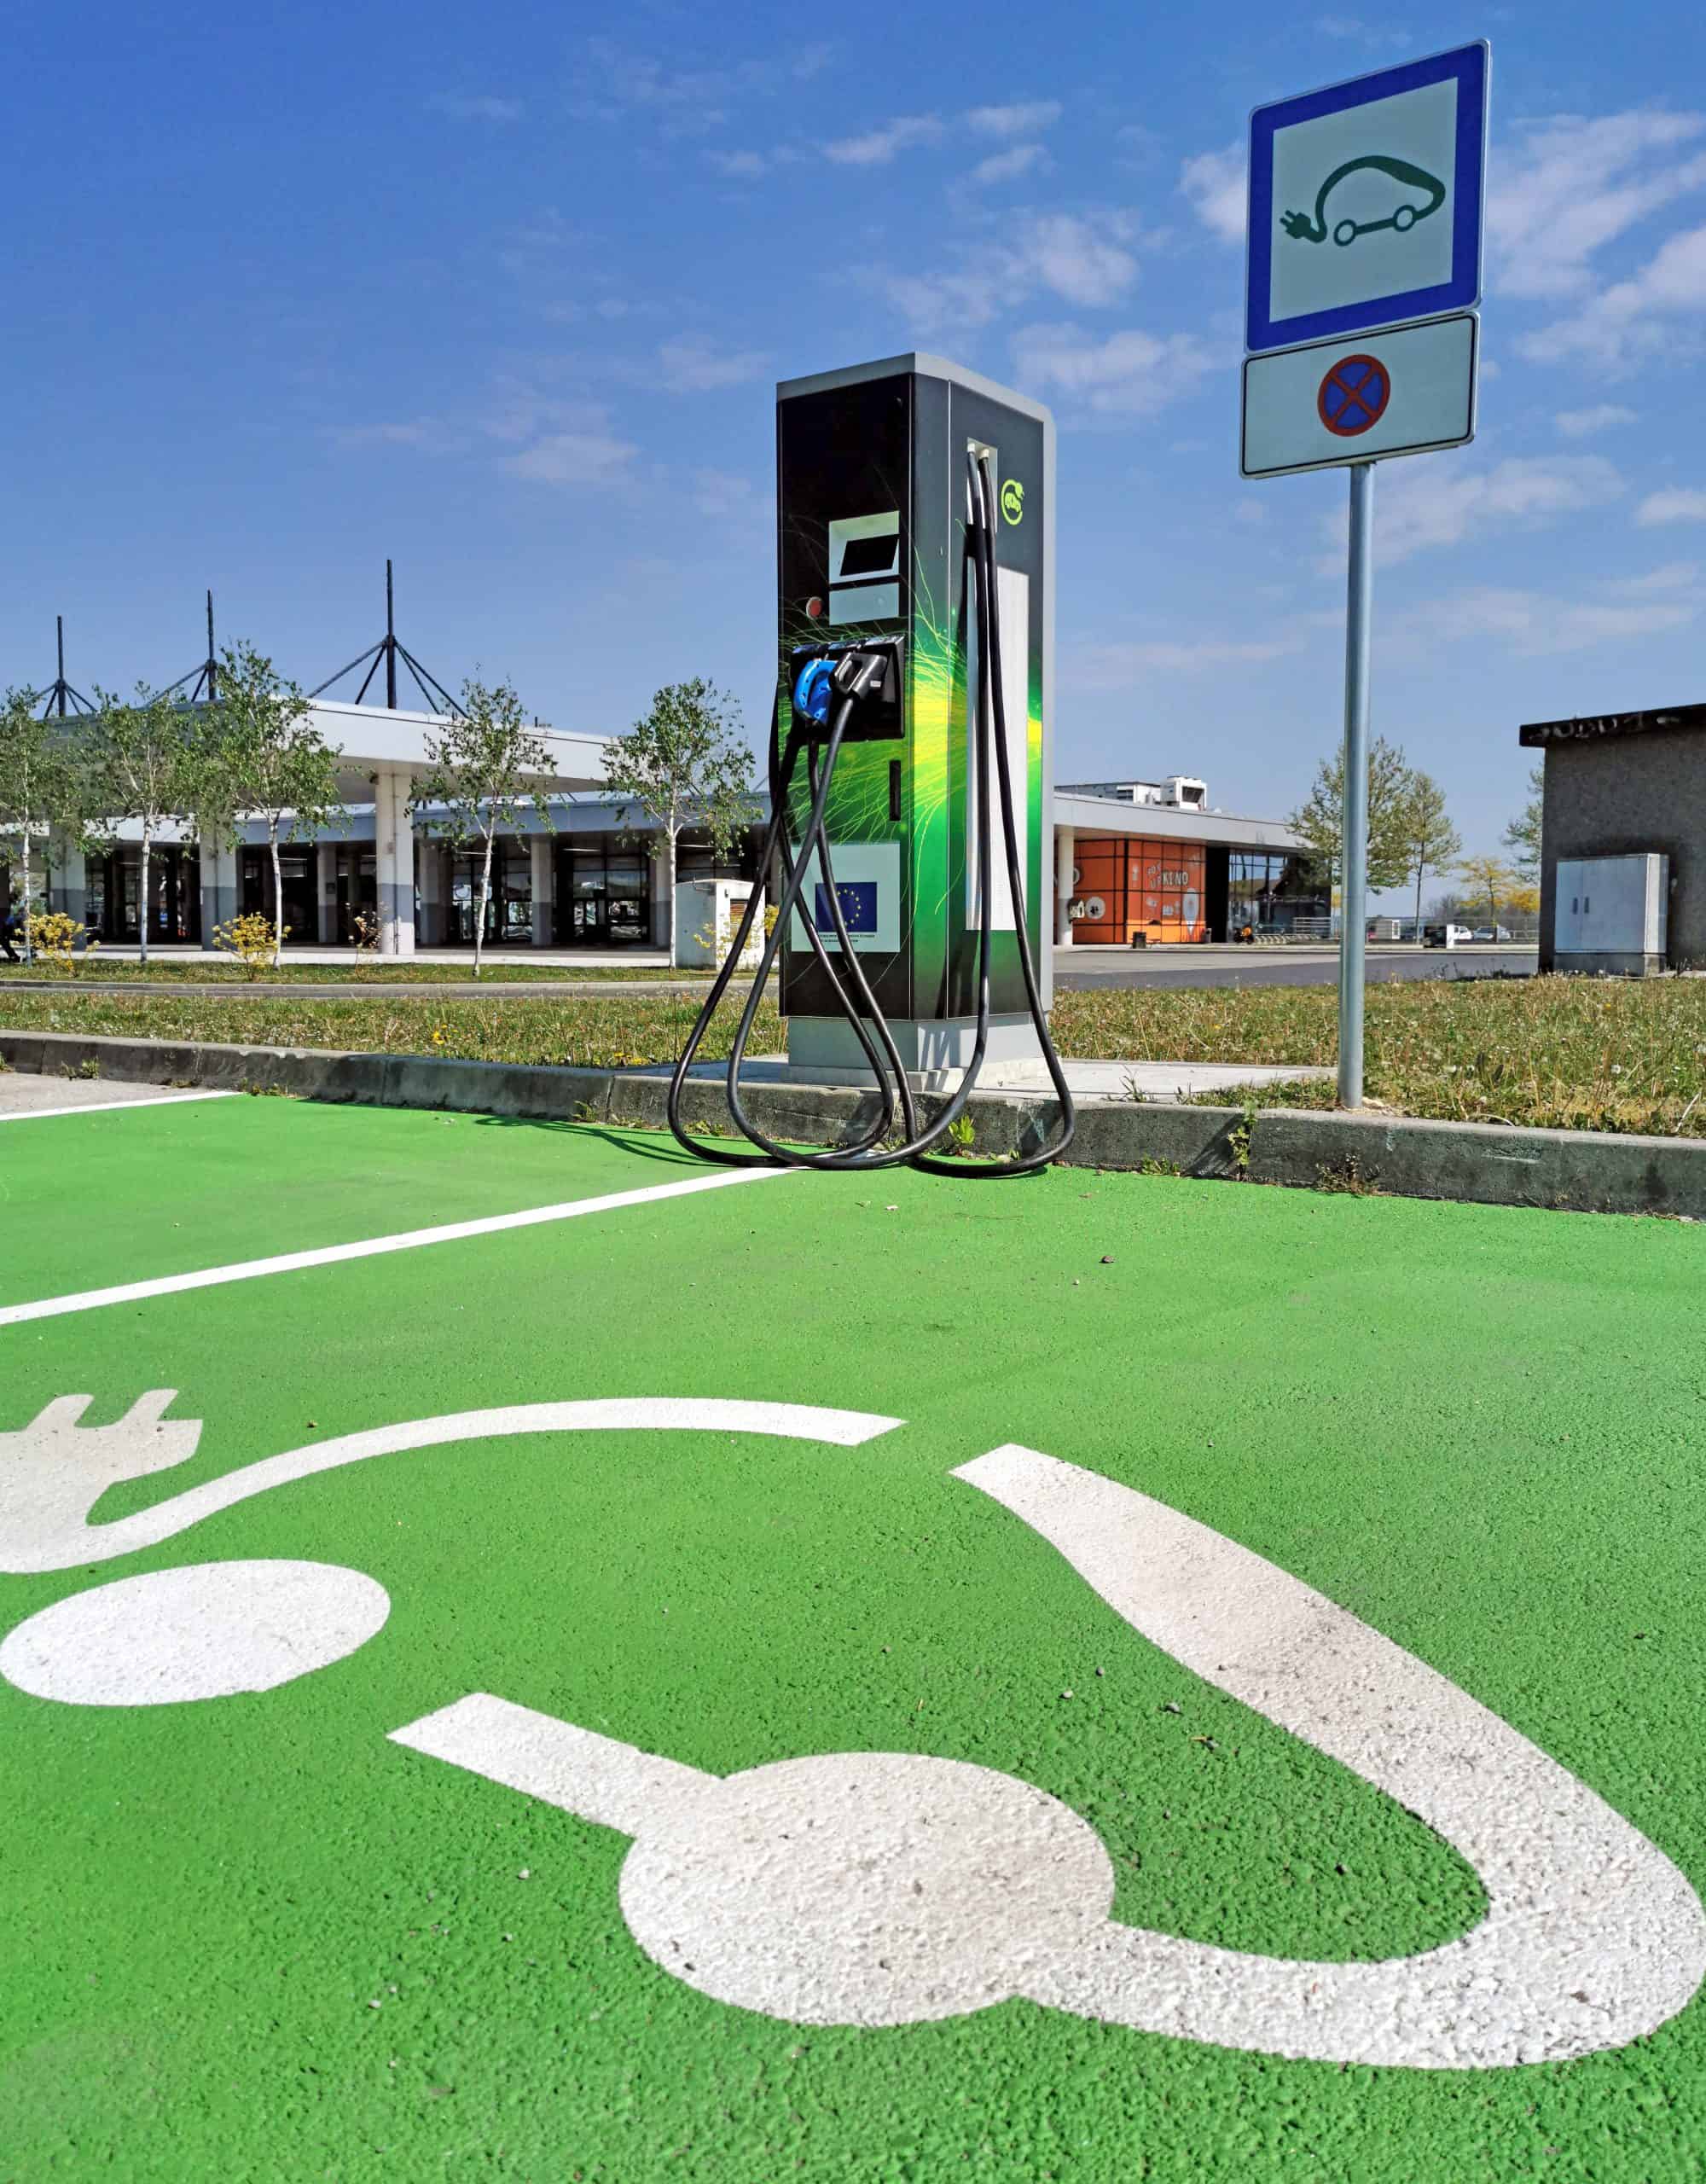 ev-charging-station-on-parking-lot-green-parking-2021-09-02-04-53-57-utc